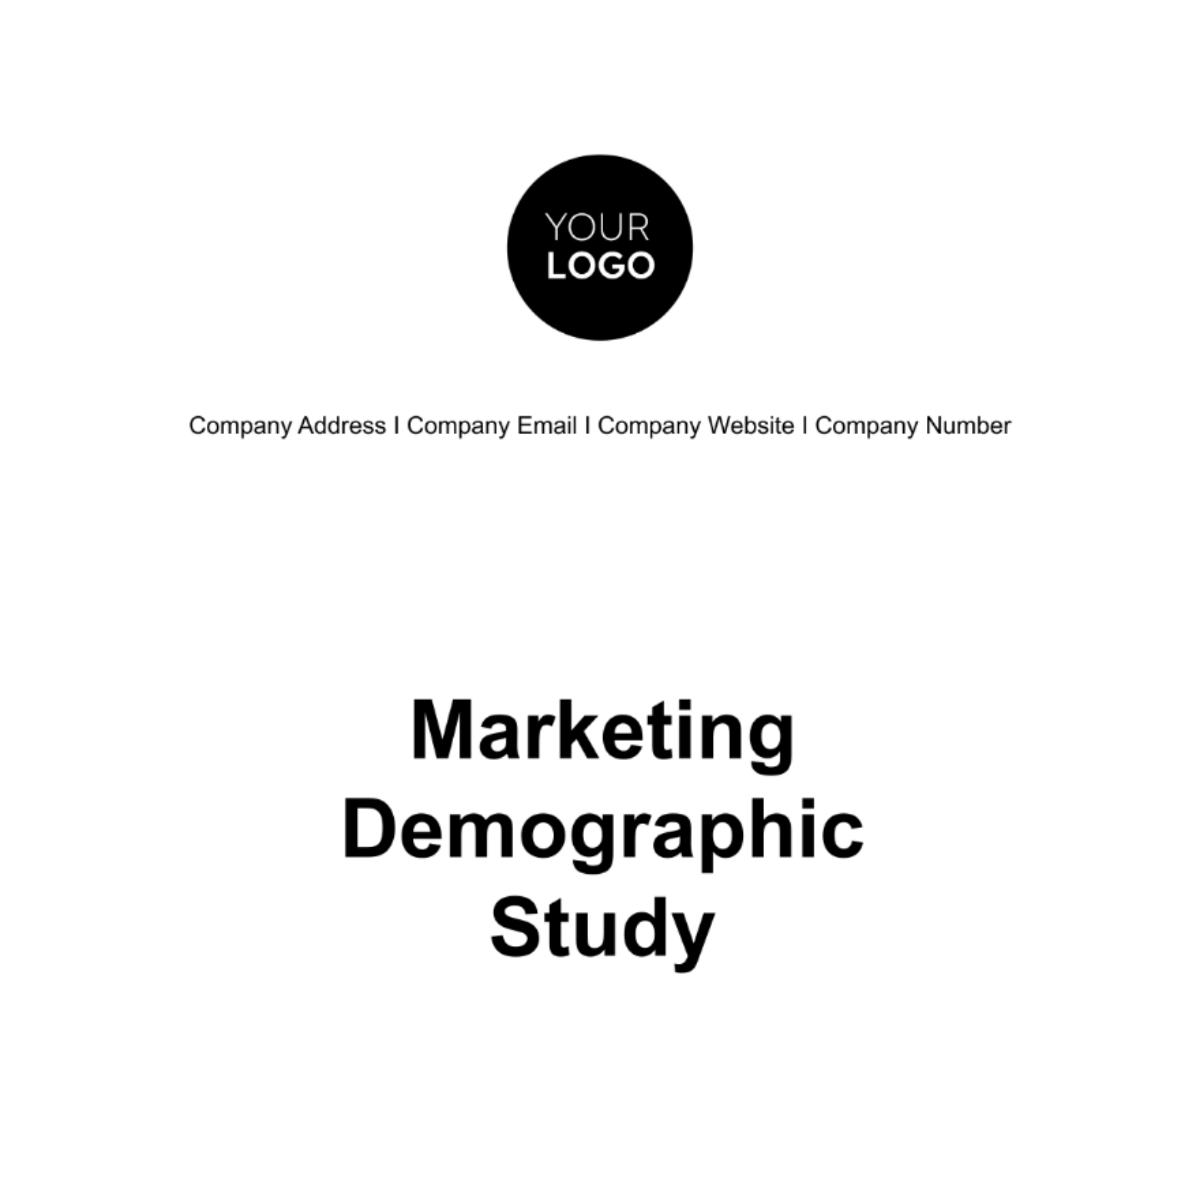 Marketing Demographic Study Template